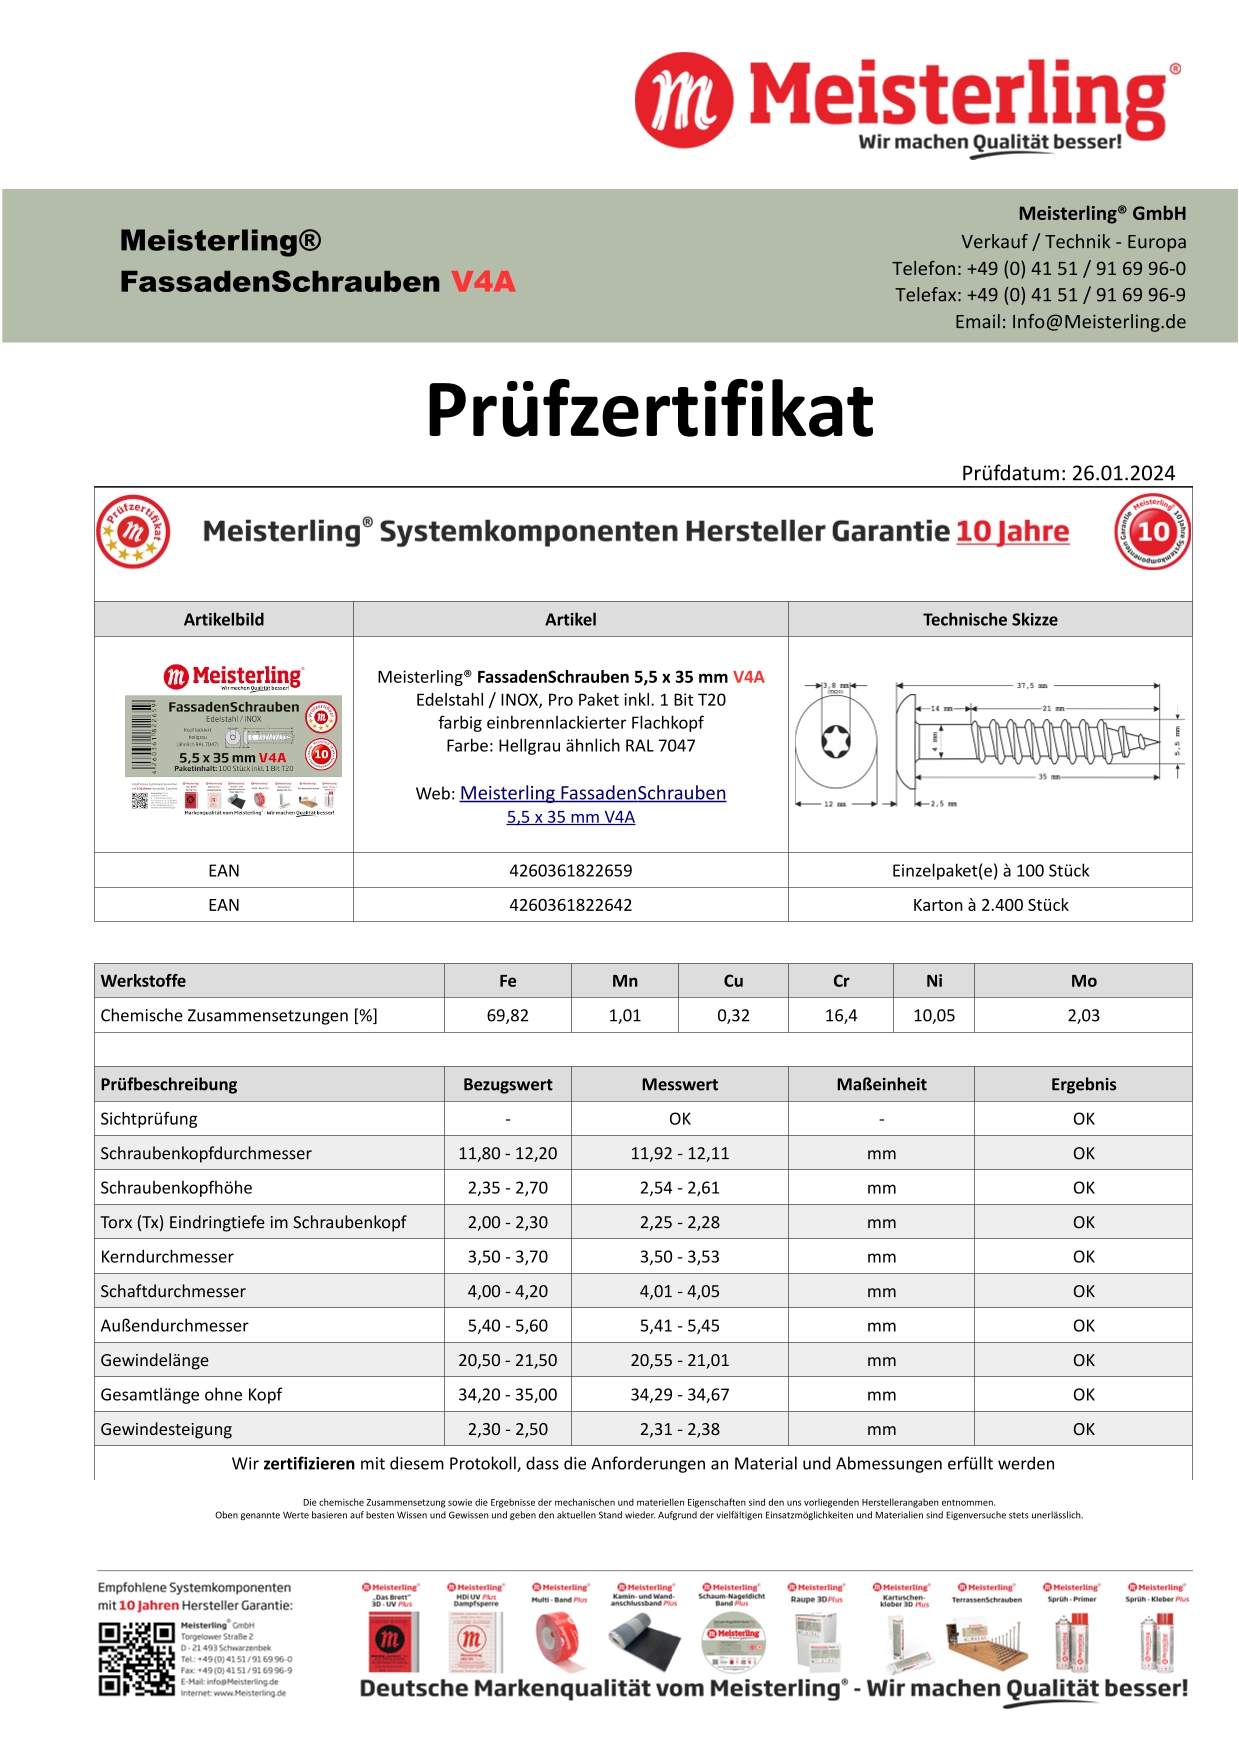 Prüfzertifikat Meisterling® FassadenSchrauben 5,5 x 35 mm V4a hellgrau